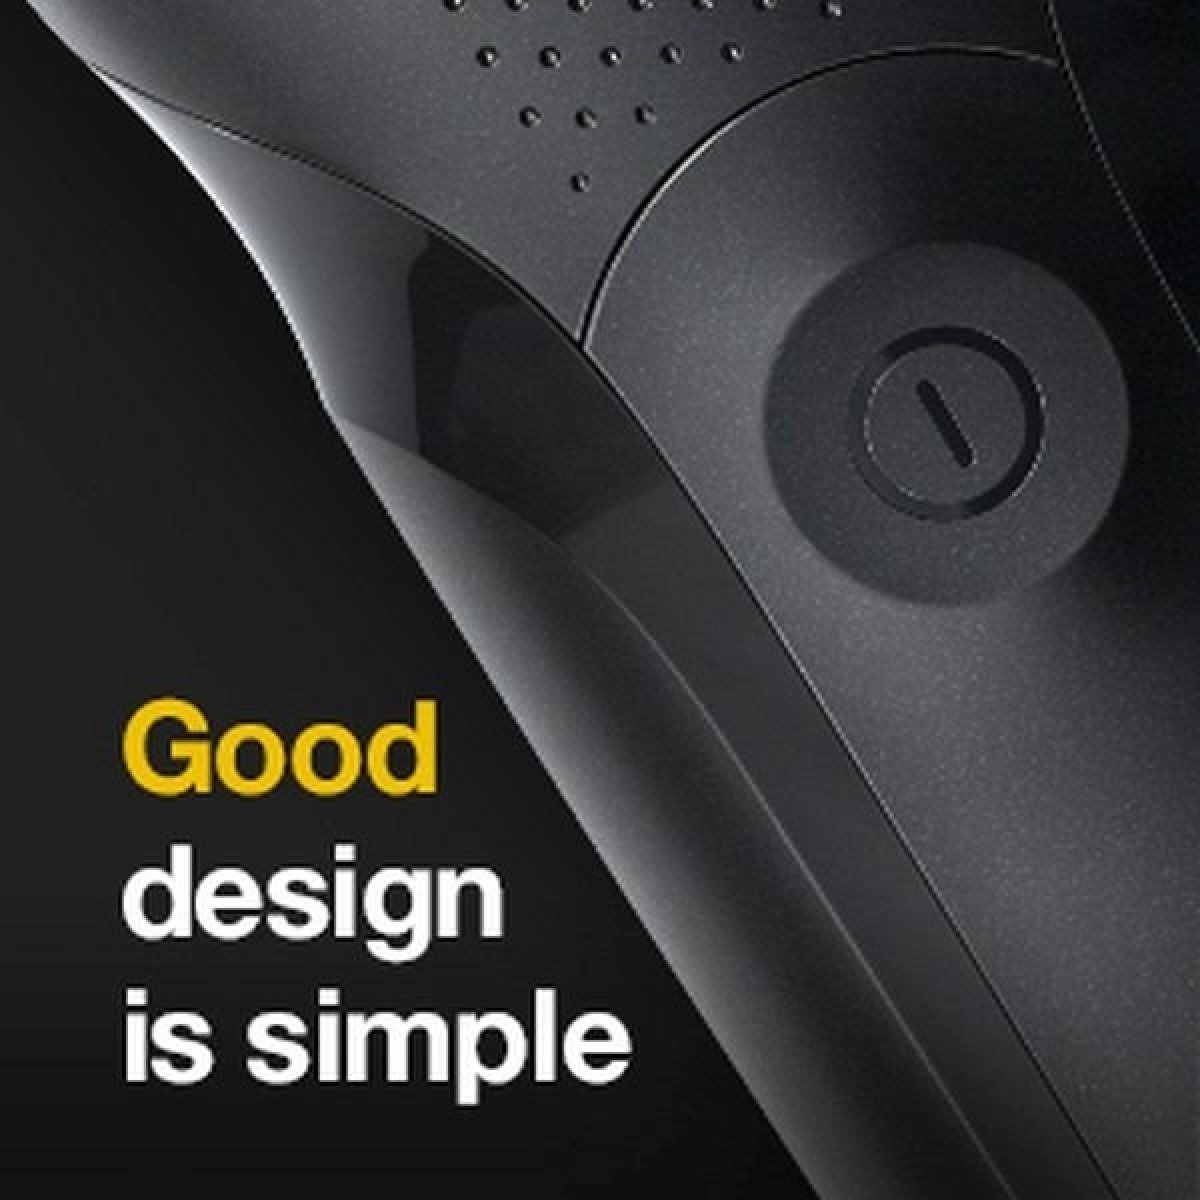 Kvalitný dizajn je jednoduchý